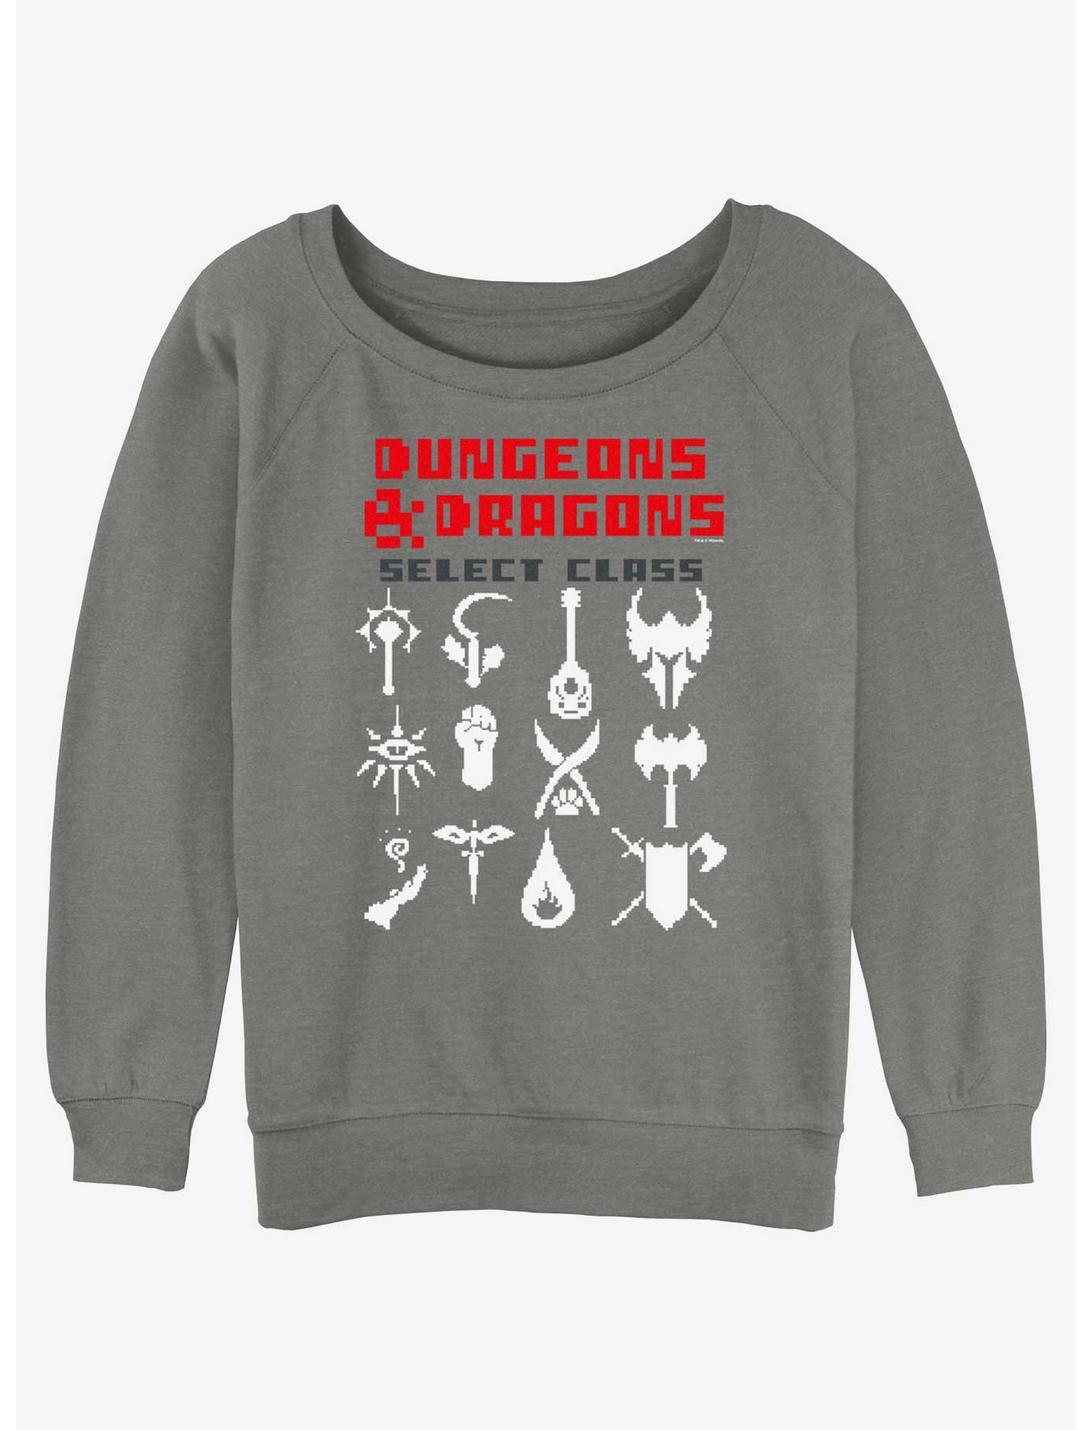 Dungeons & Dragons Select Class Girls Slouchy Sweatshirt, GRAY HTR, hi-res